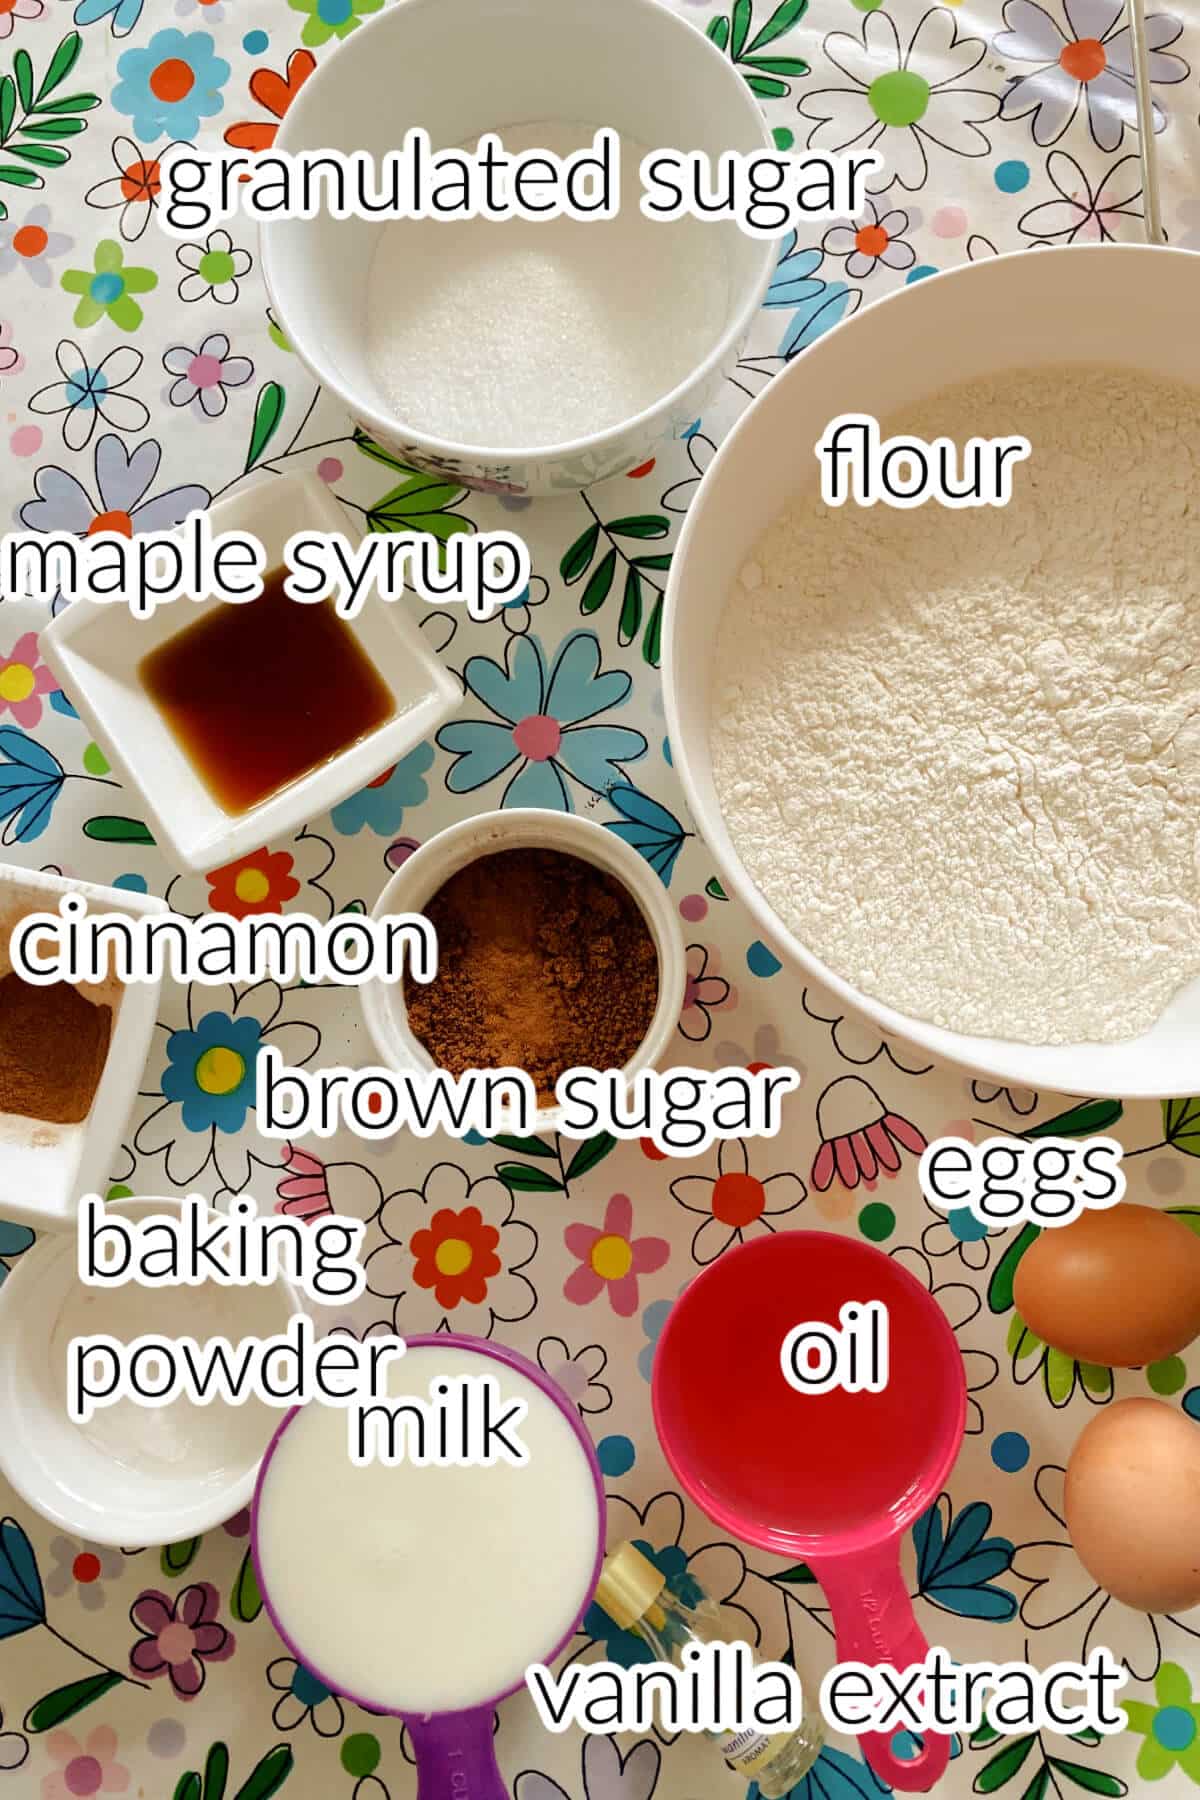 Ingredients needed to make cinnamon muffins